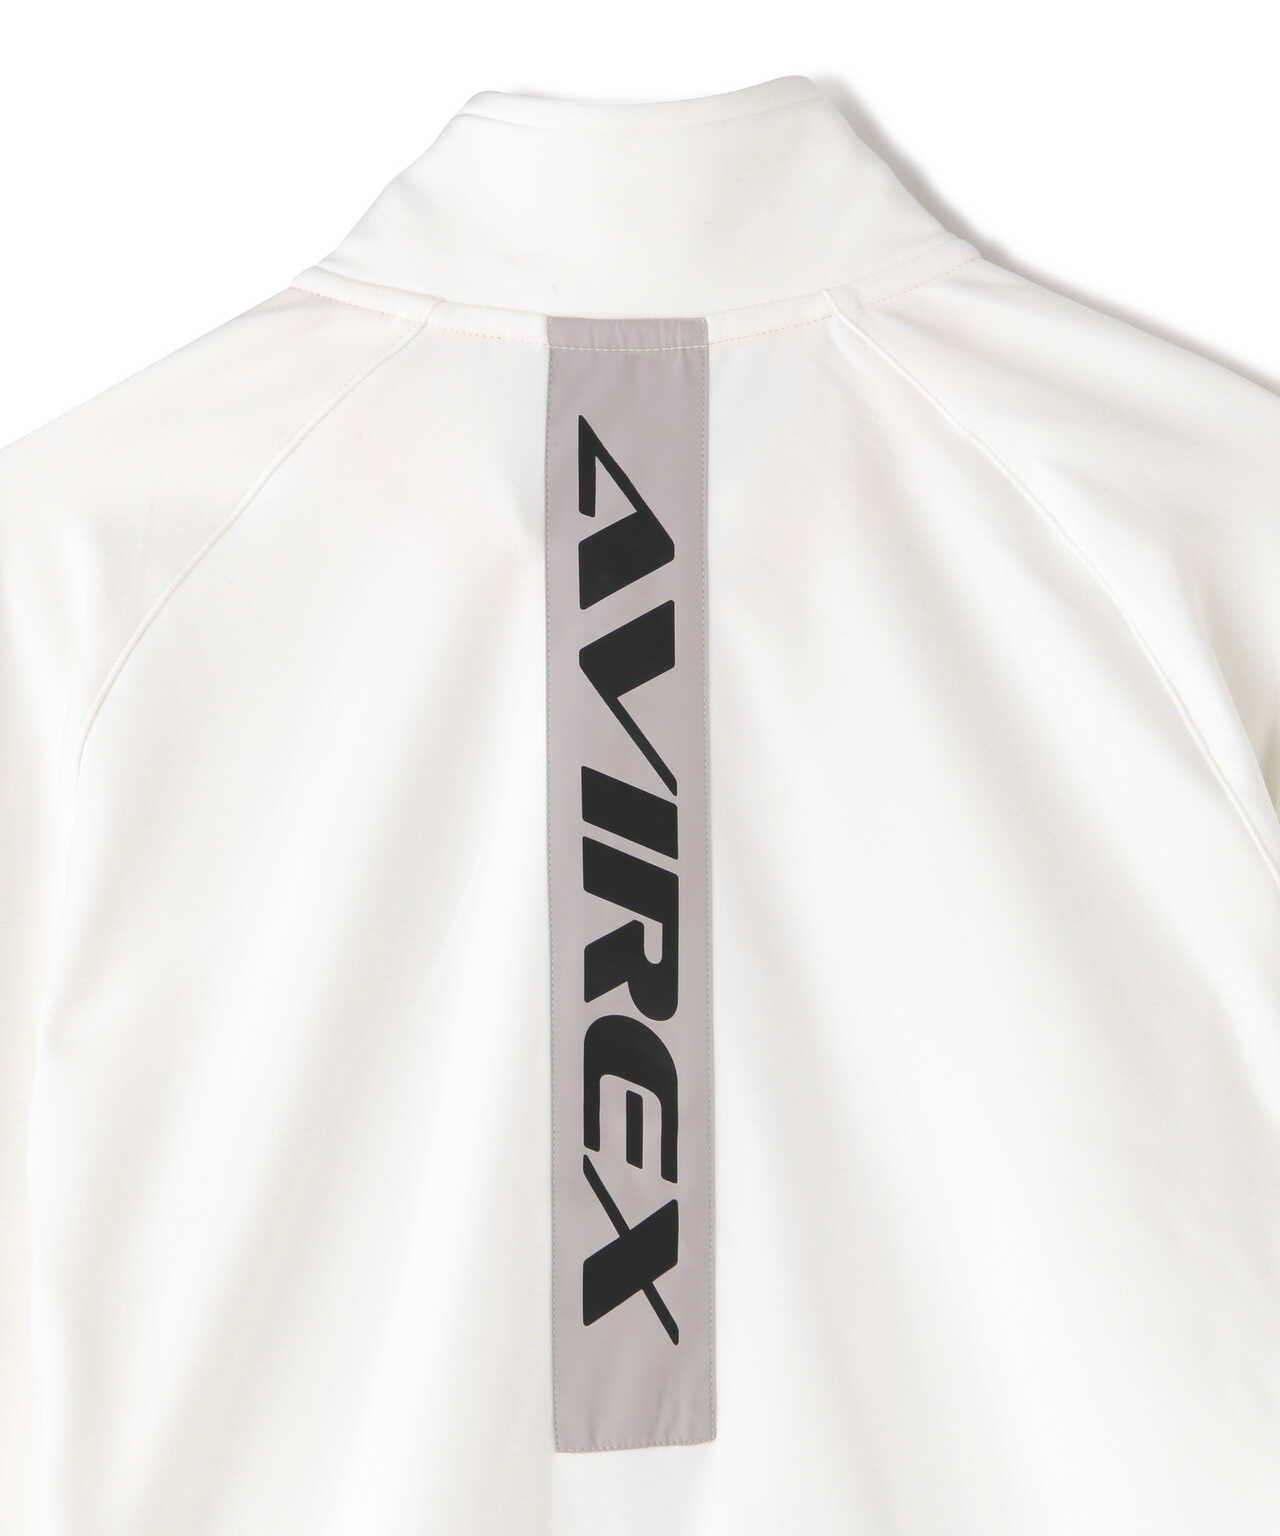 《AVIREX GOLF》スポーツラインスウェットジャケット